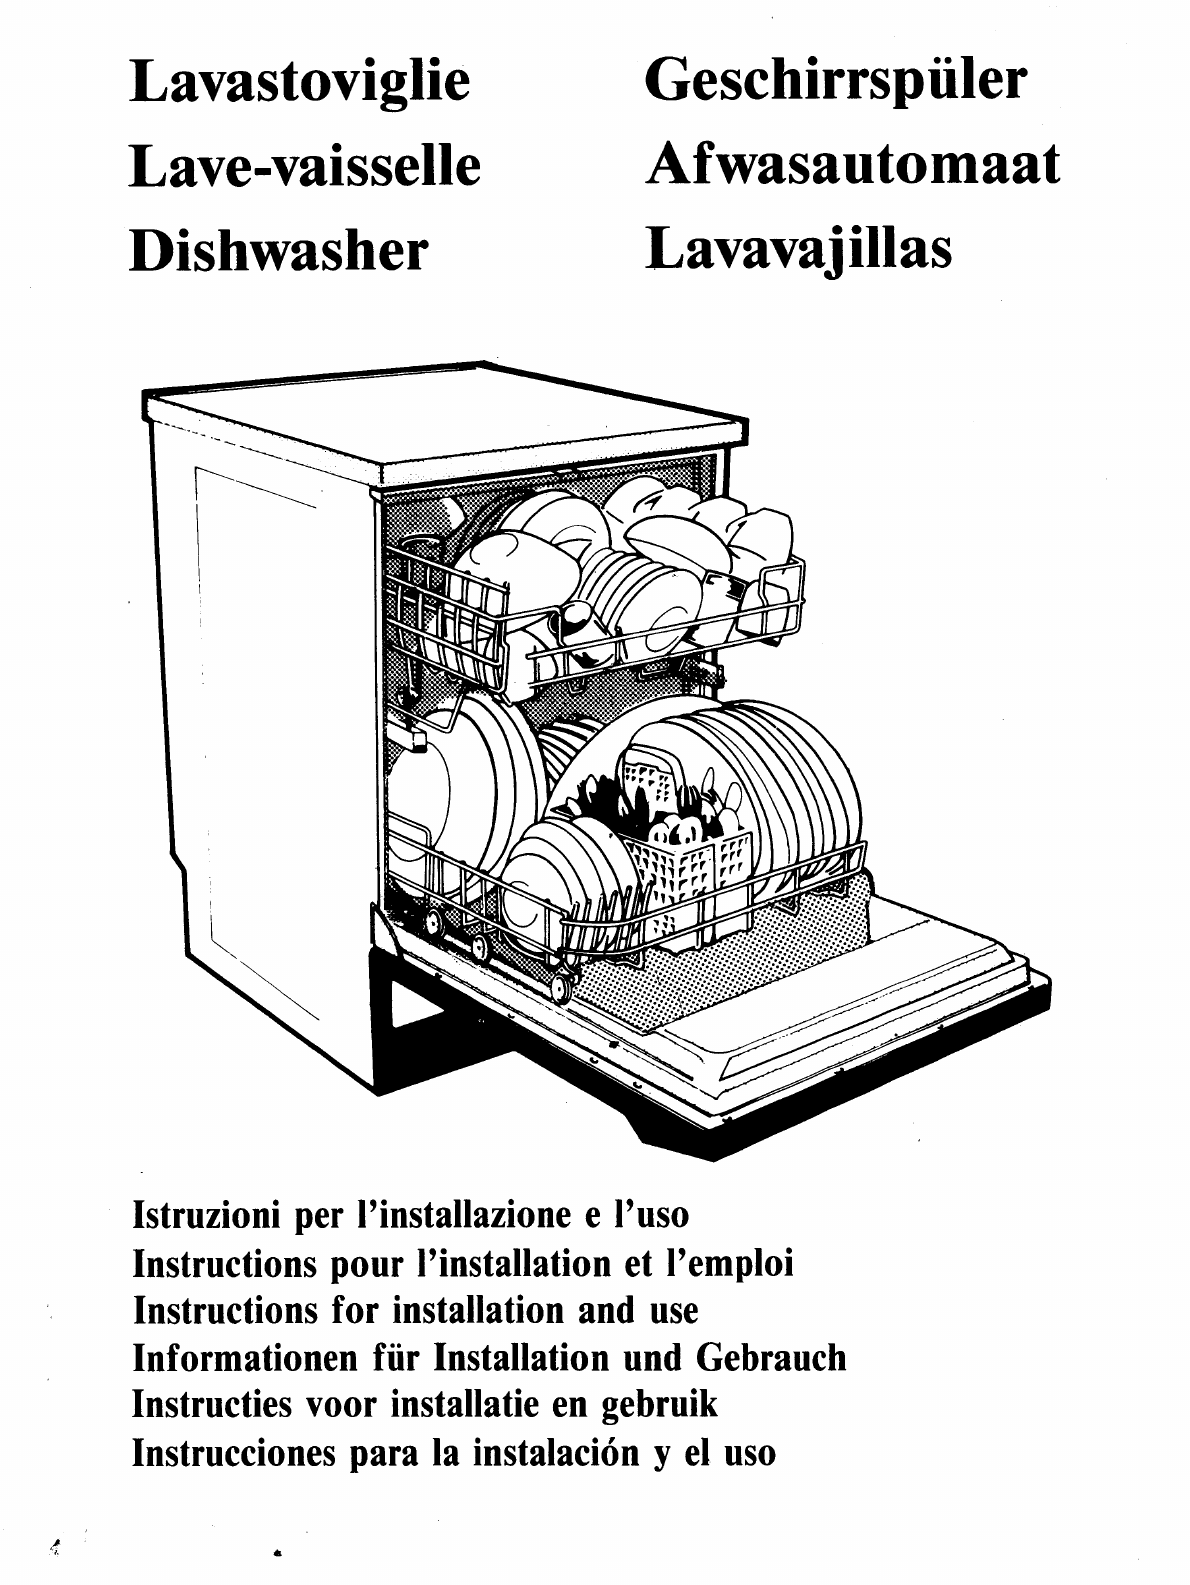 Smeg dishwasher manual di612ca